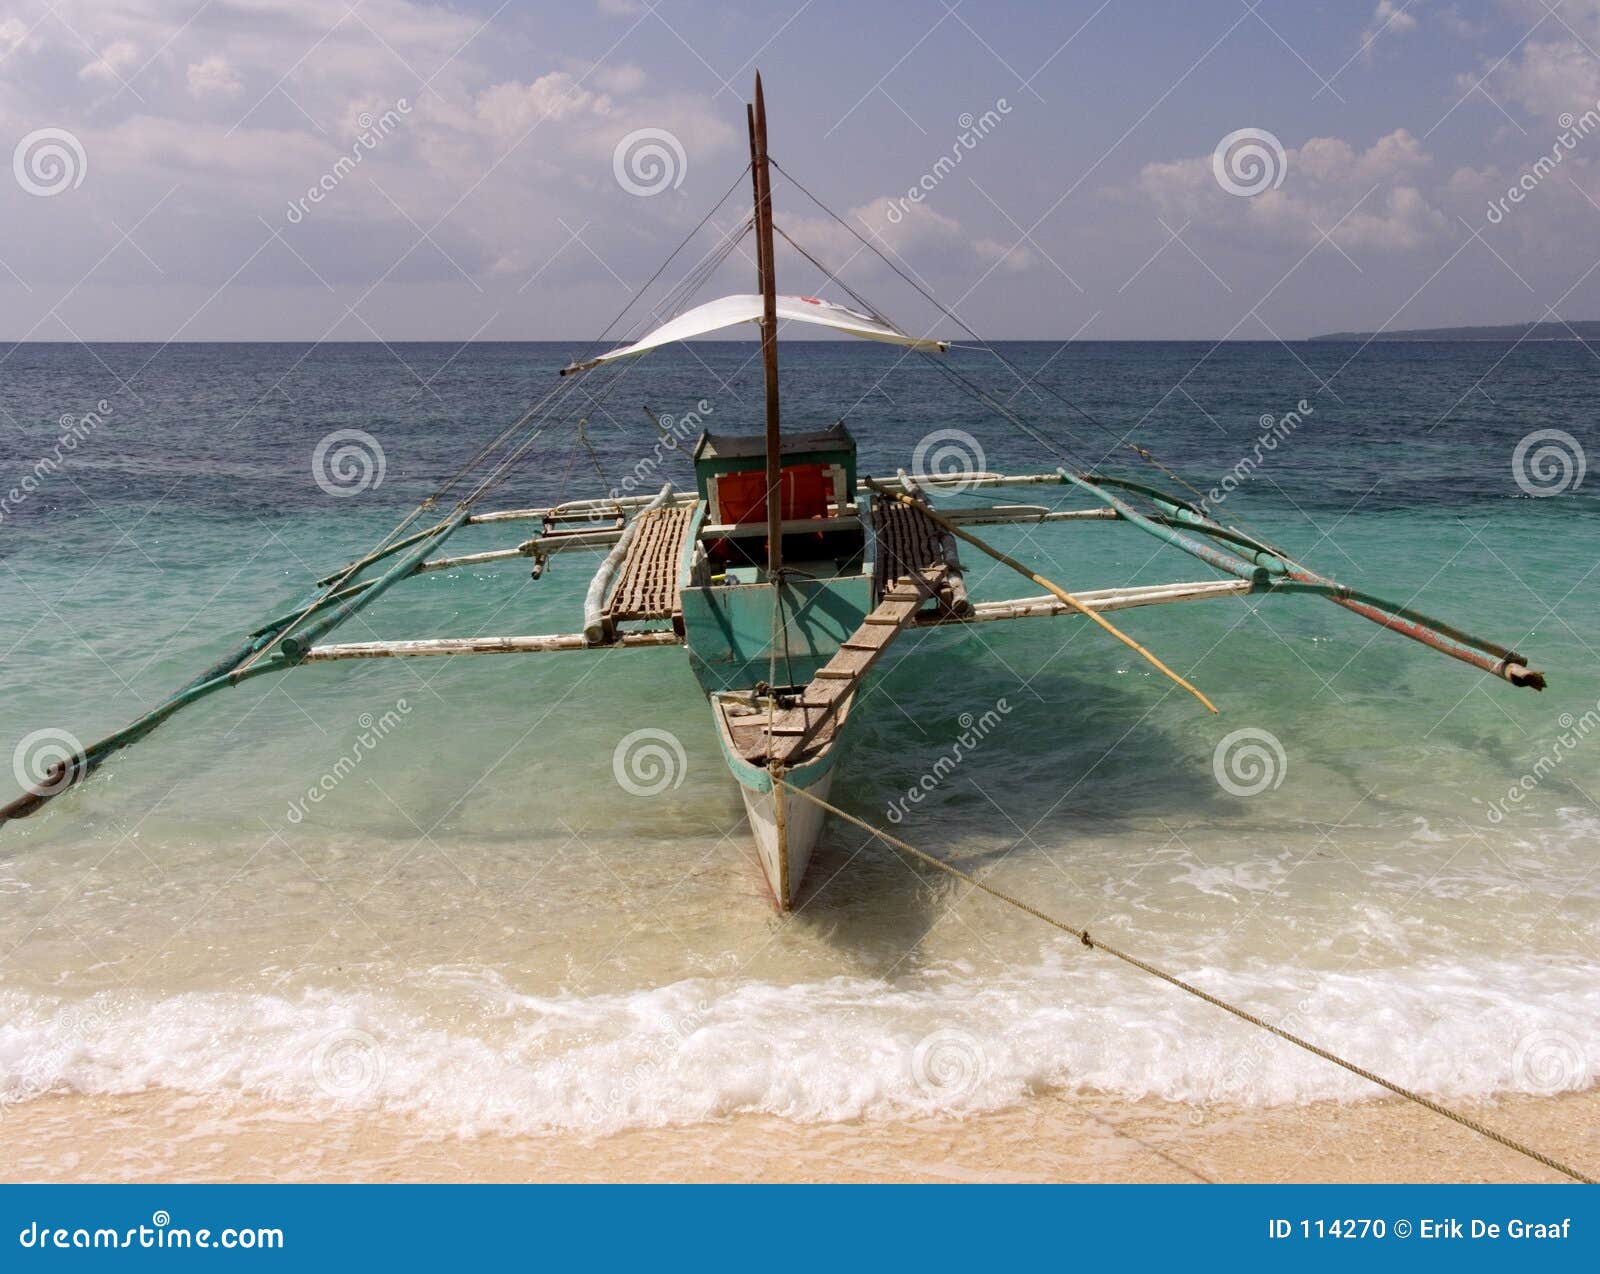 Philippine fishing boat 1 stock photo. Image of colourful 